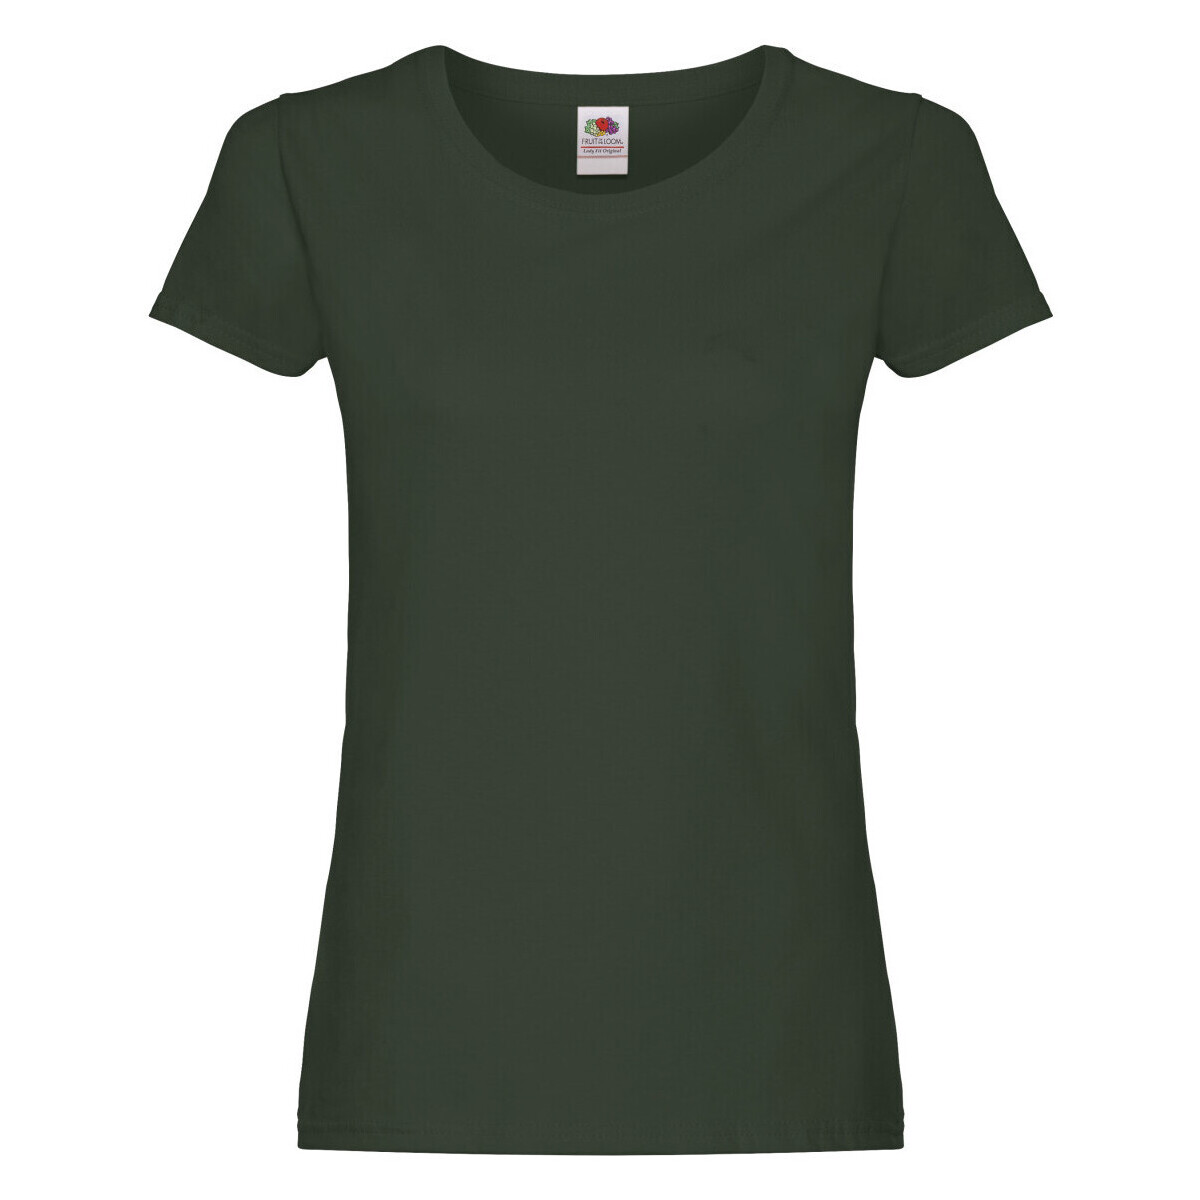 Vêtements Femme T-shirts manches longues Fruit Of The Loom 61420 Vert